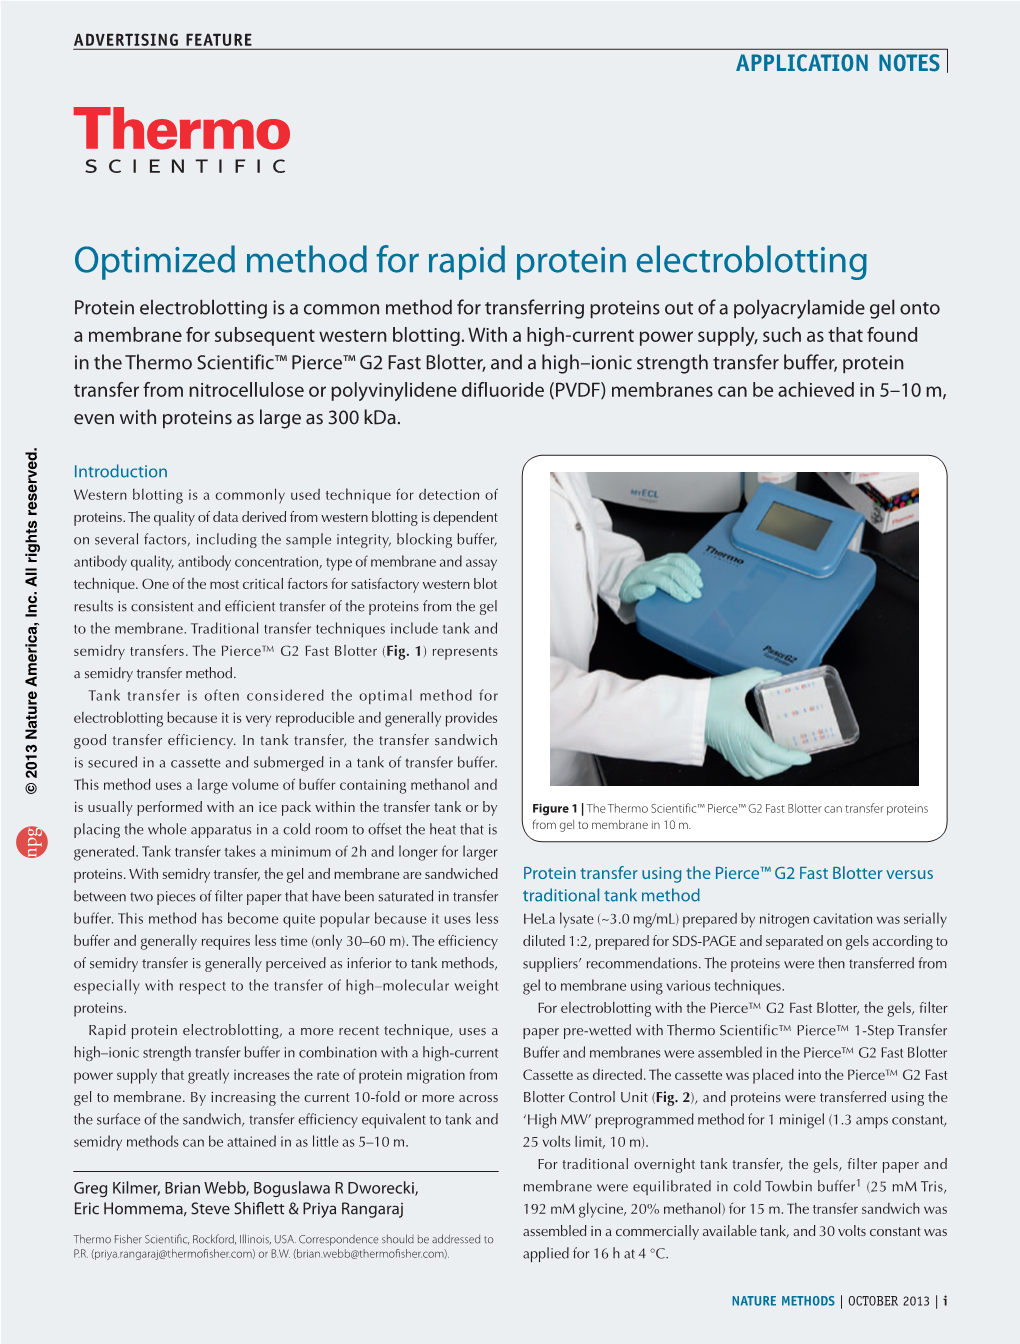 Optimized Method for Rapid Protein Electroblotting